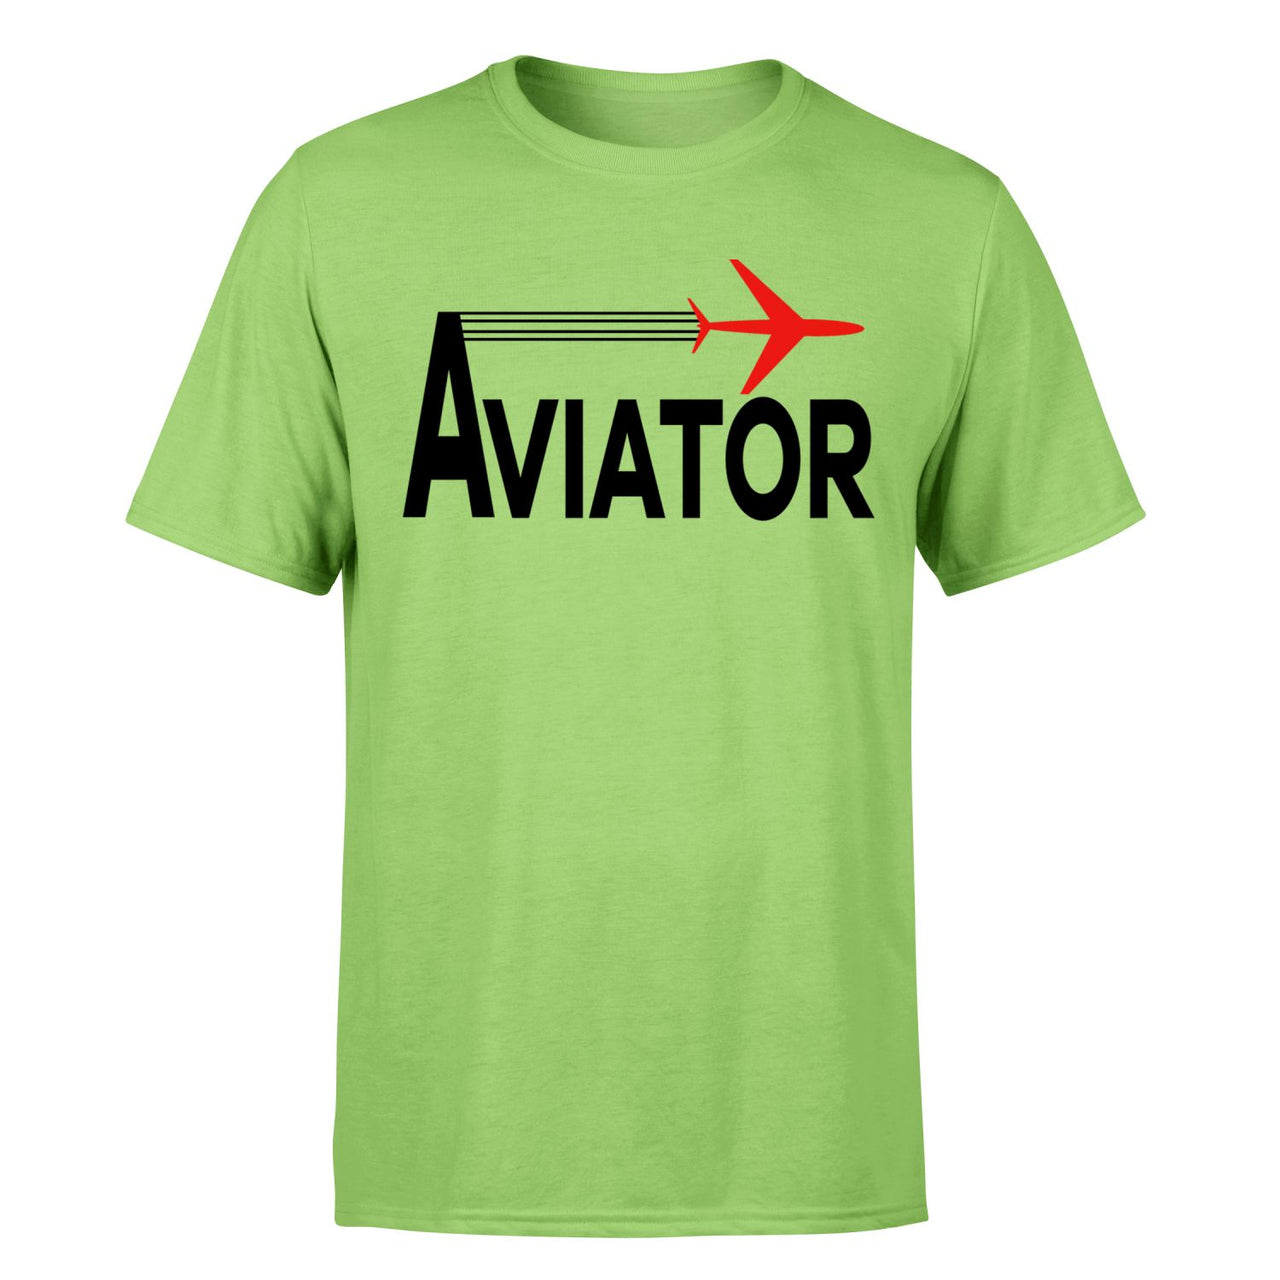 Aviator Designed T-Shirts